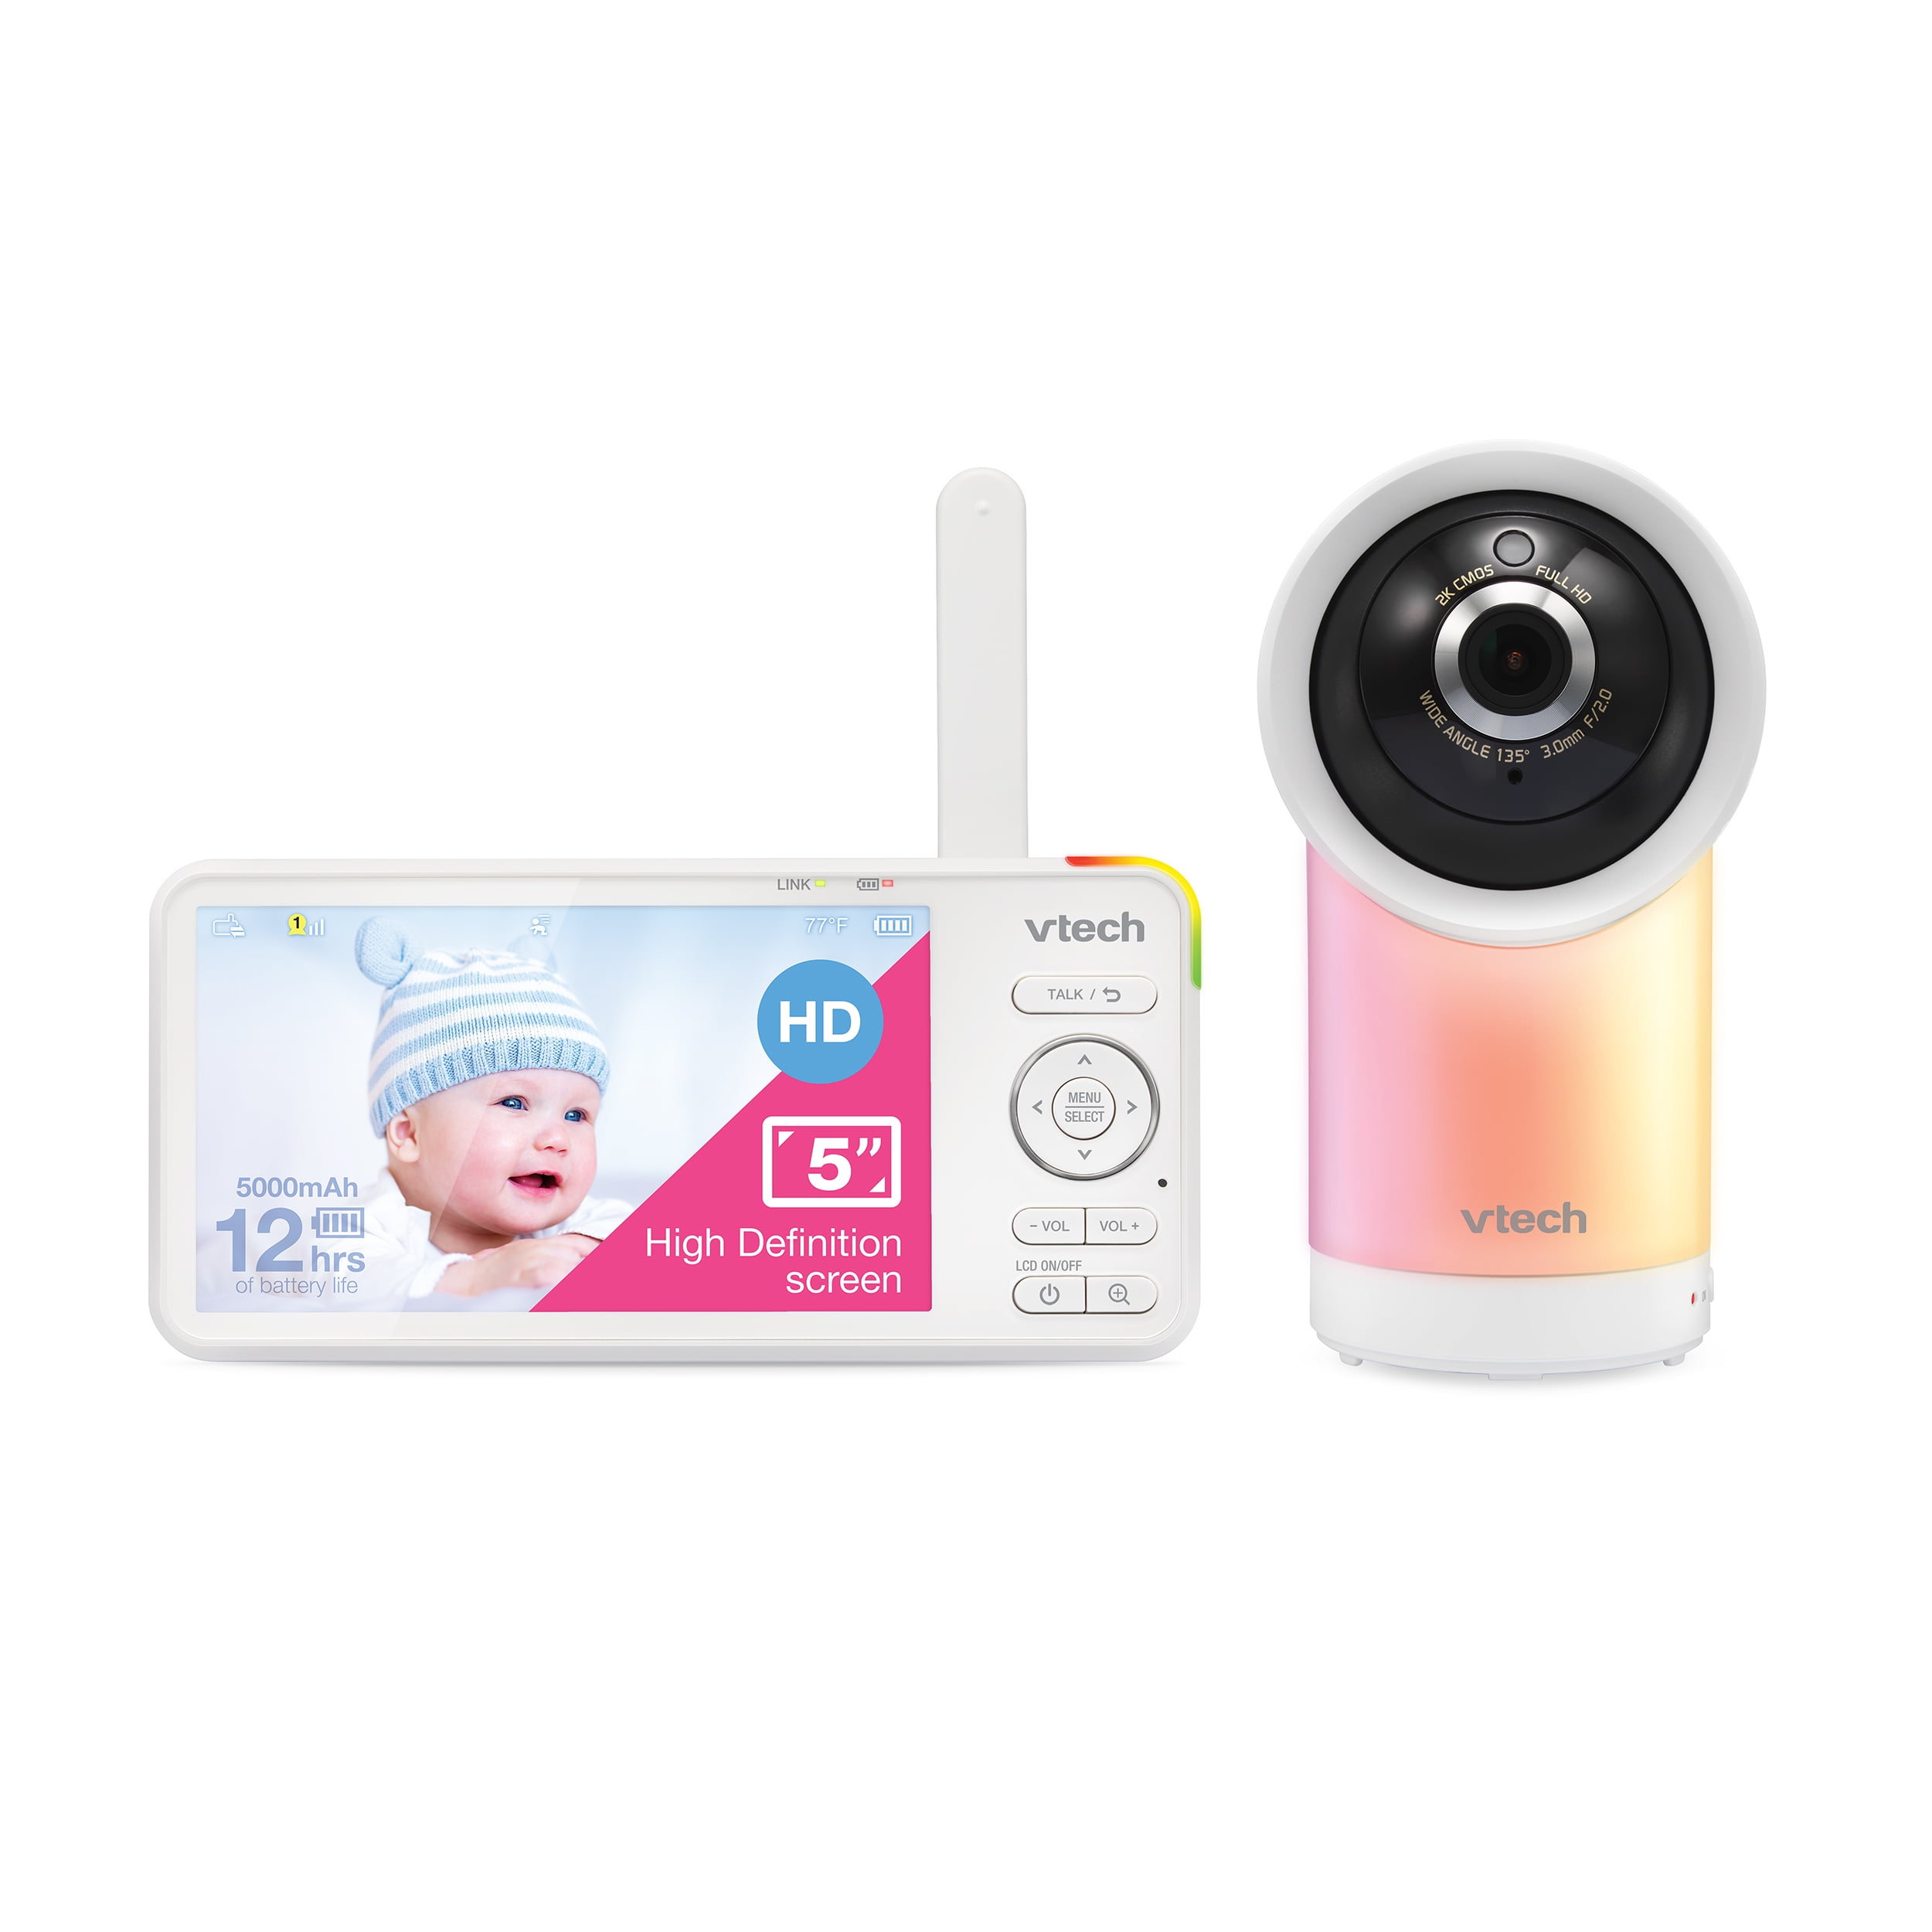 Babysense 1080p Full HD Split-Screen Baby Monitor - 2 Cameras